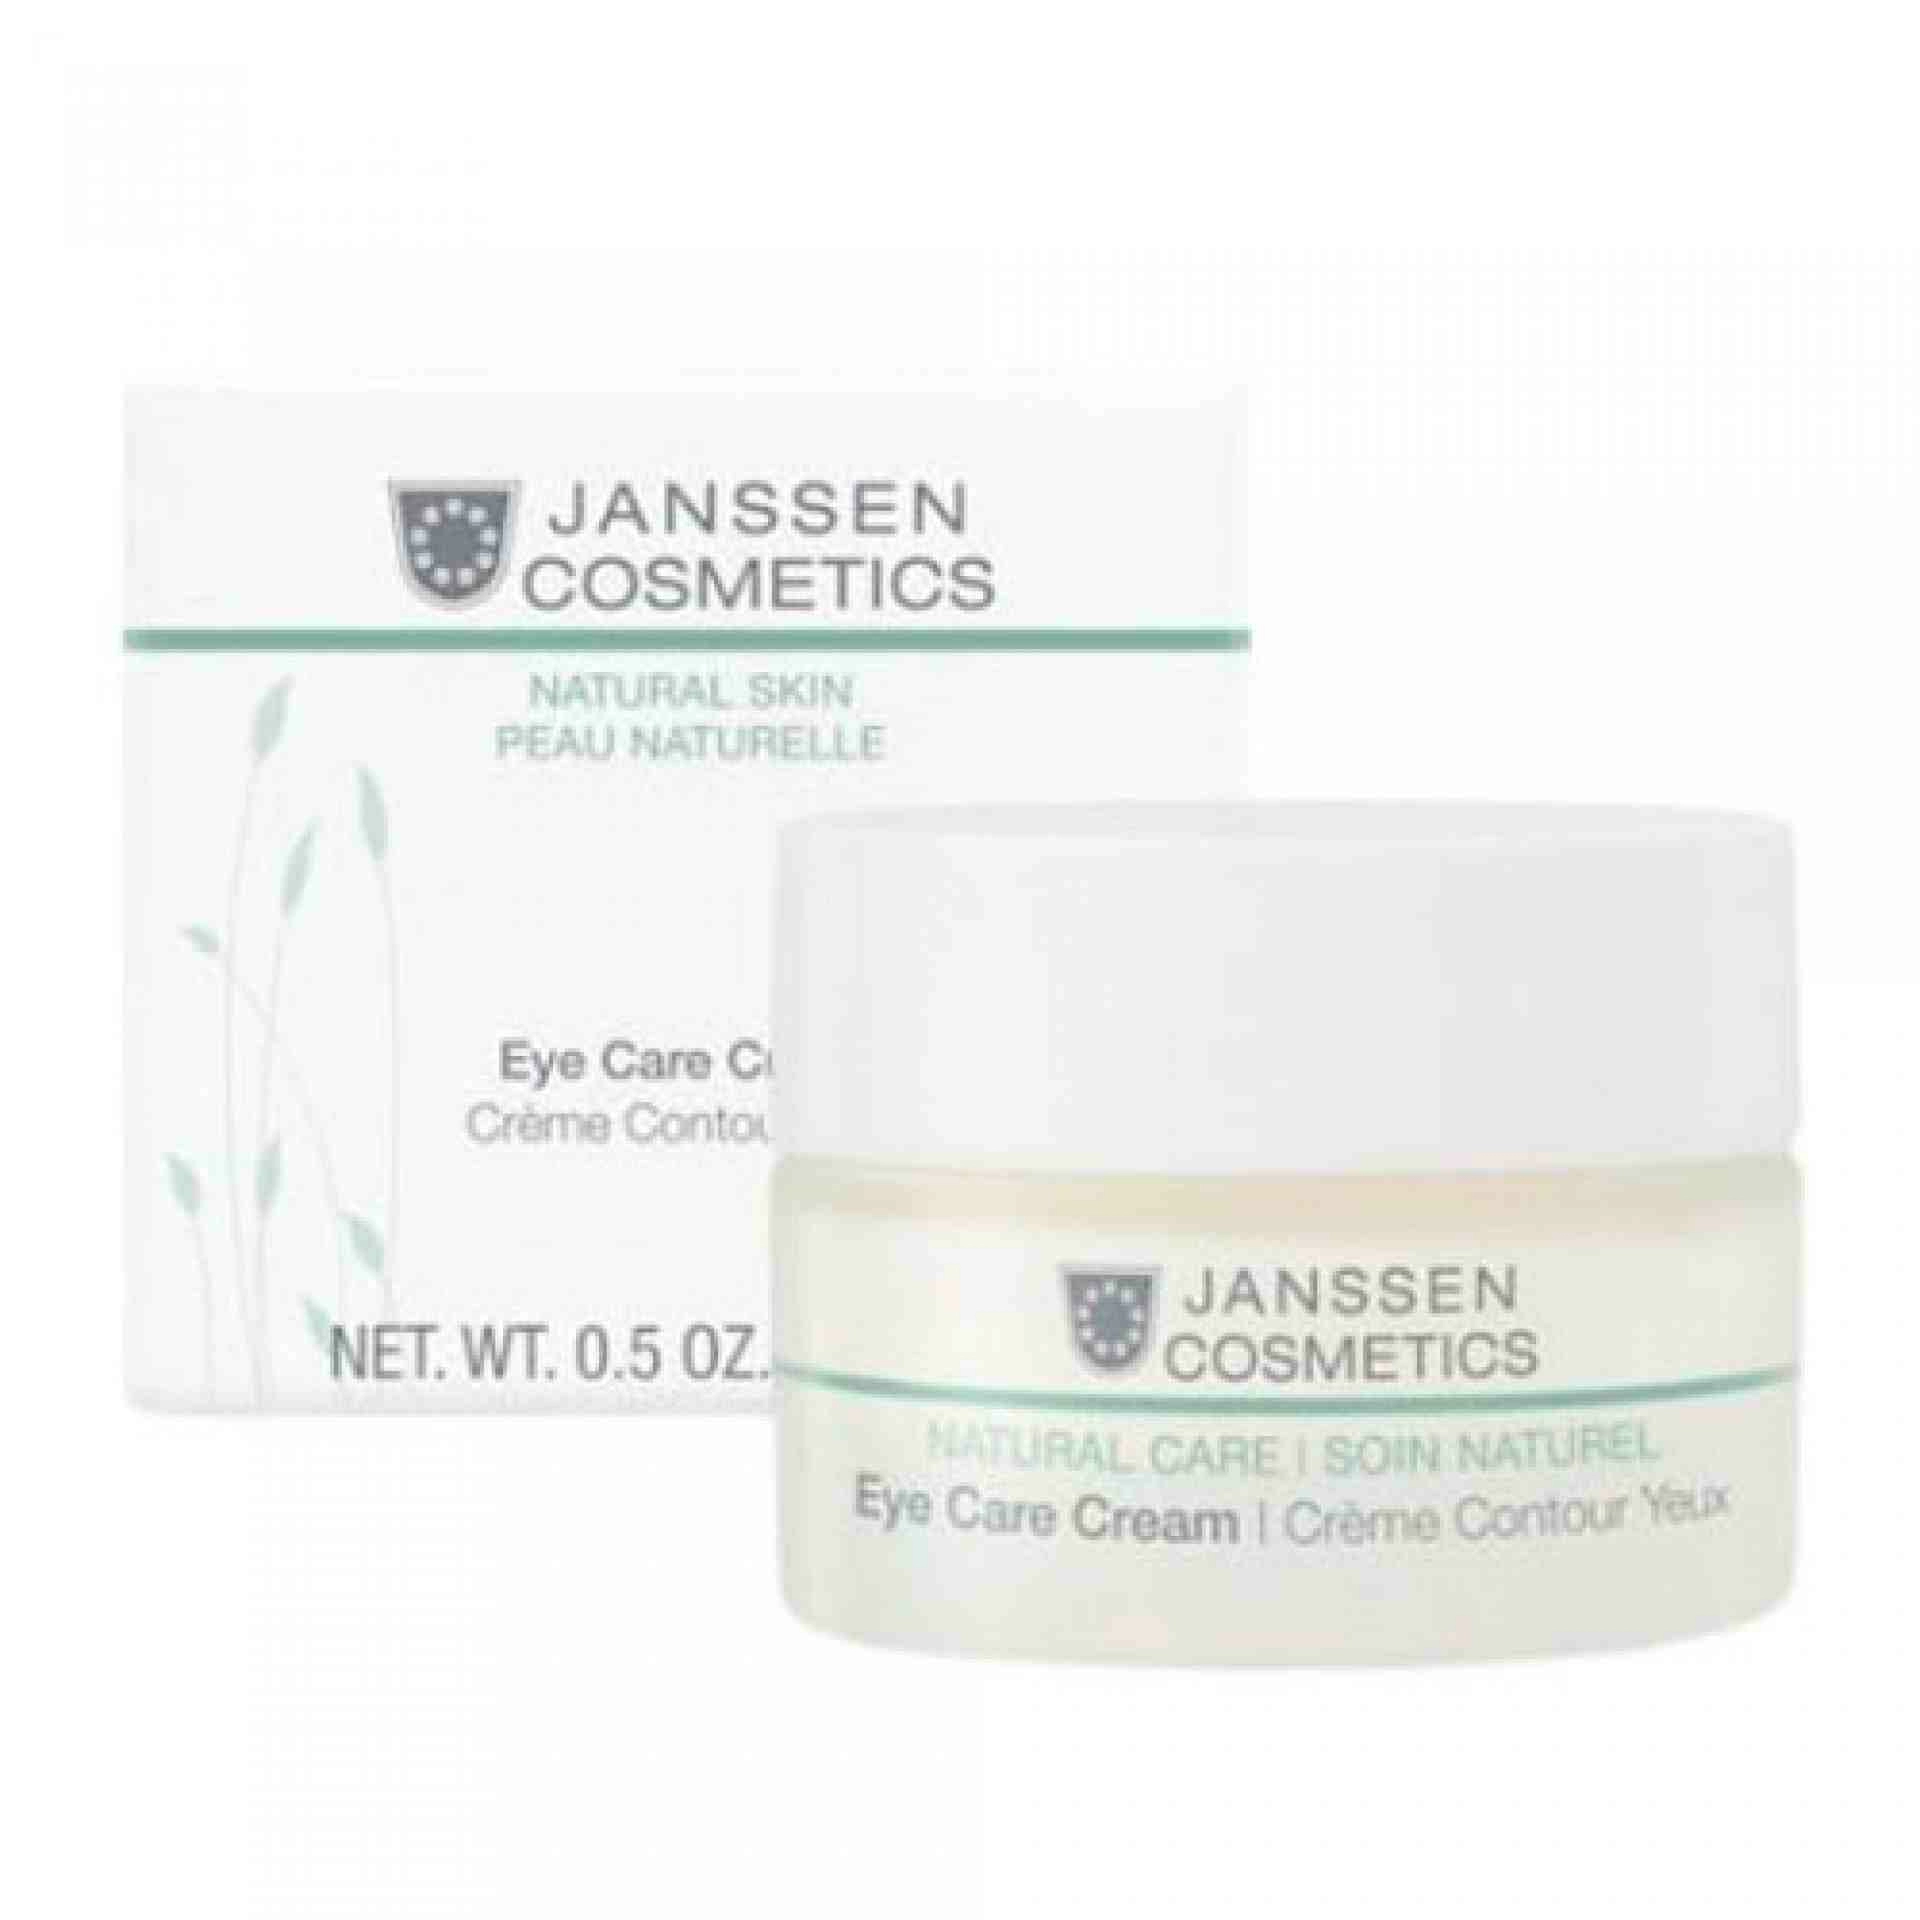 Natural Care Eye Care Cream 15ml Janssen Cosmetics®